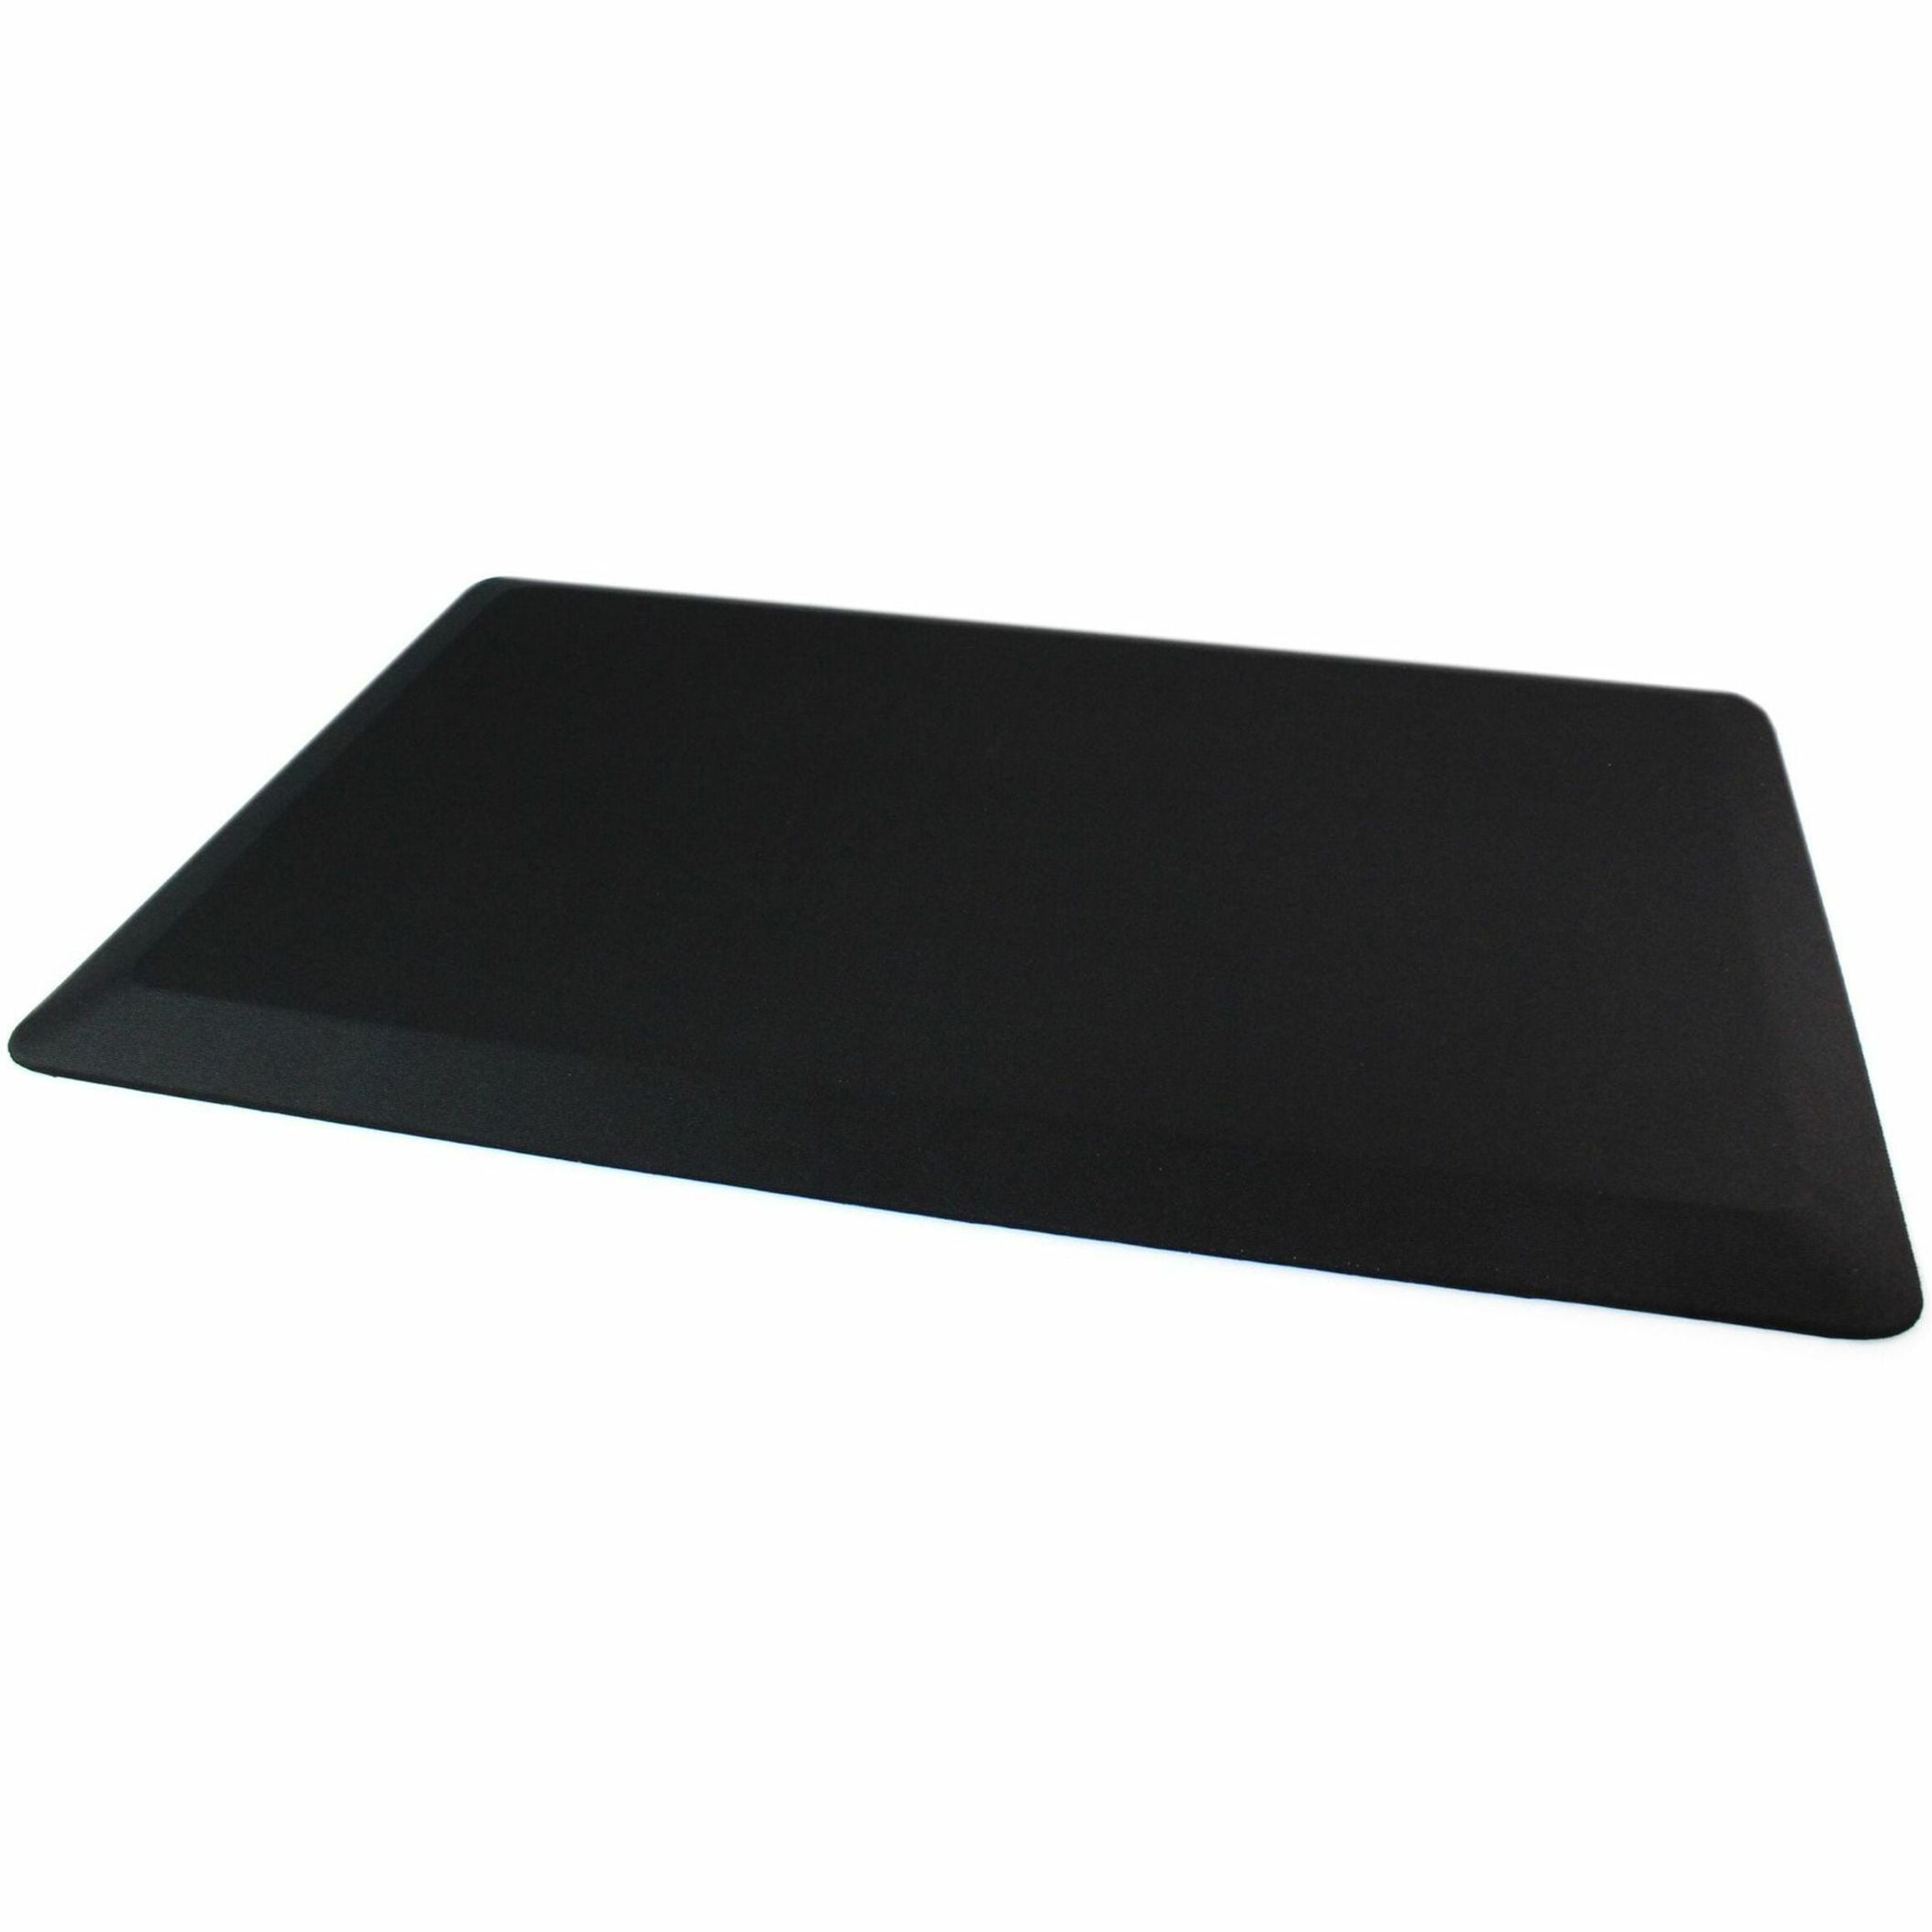 PEACNNG Anti Fatigue Mat Cushioned Kitchen Mat - Non Slip Foam Comfort  Cushion for Standing Desk, Office or Garage Floor